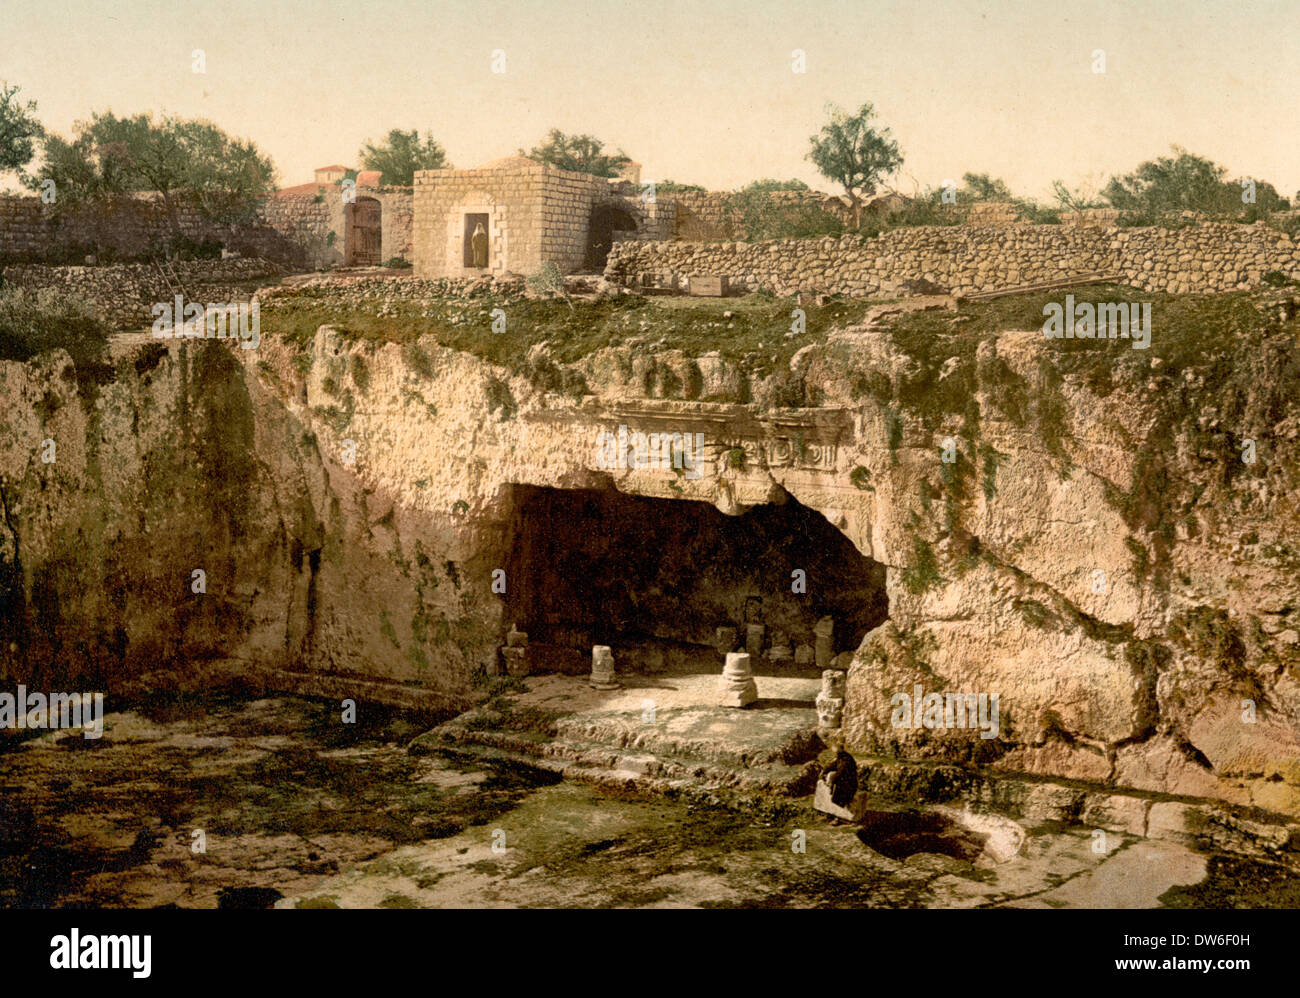 Tombe dei re di Gerusalemme, Terra Santa, circa 1900 Foto Stock